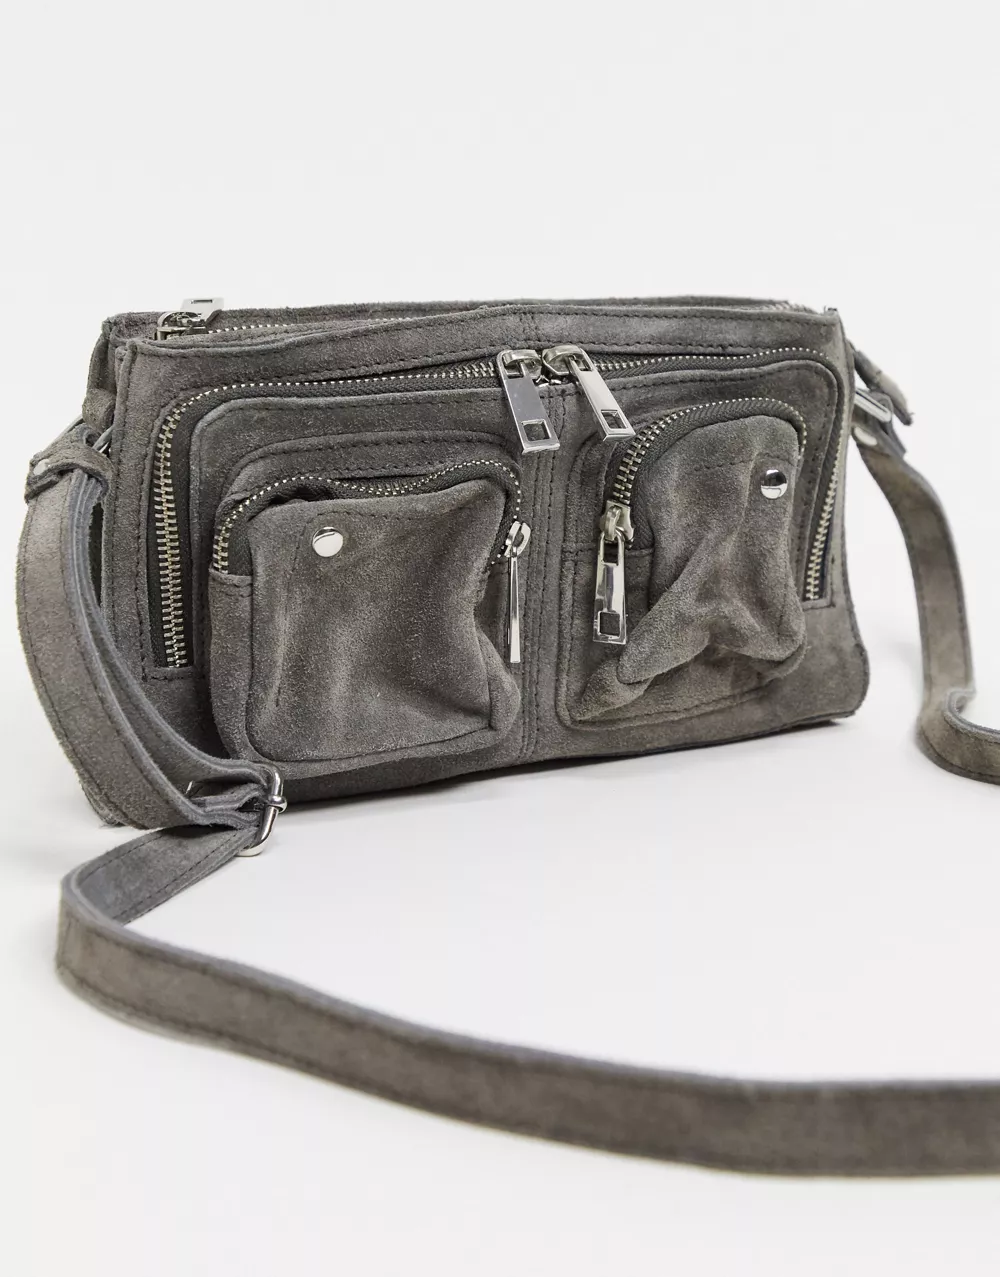 Nunoo Gray Stine Suede Bag with Zipper Pockets